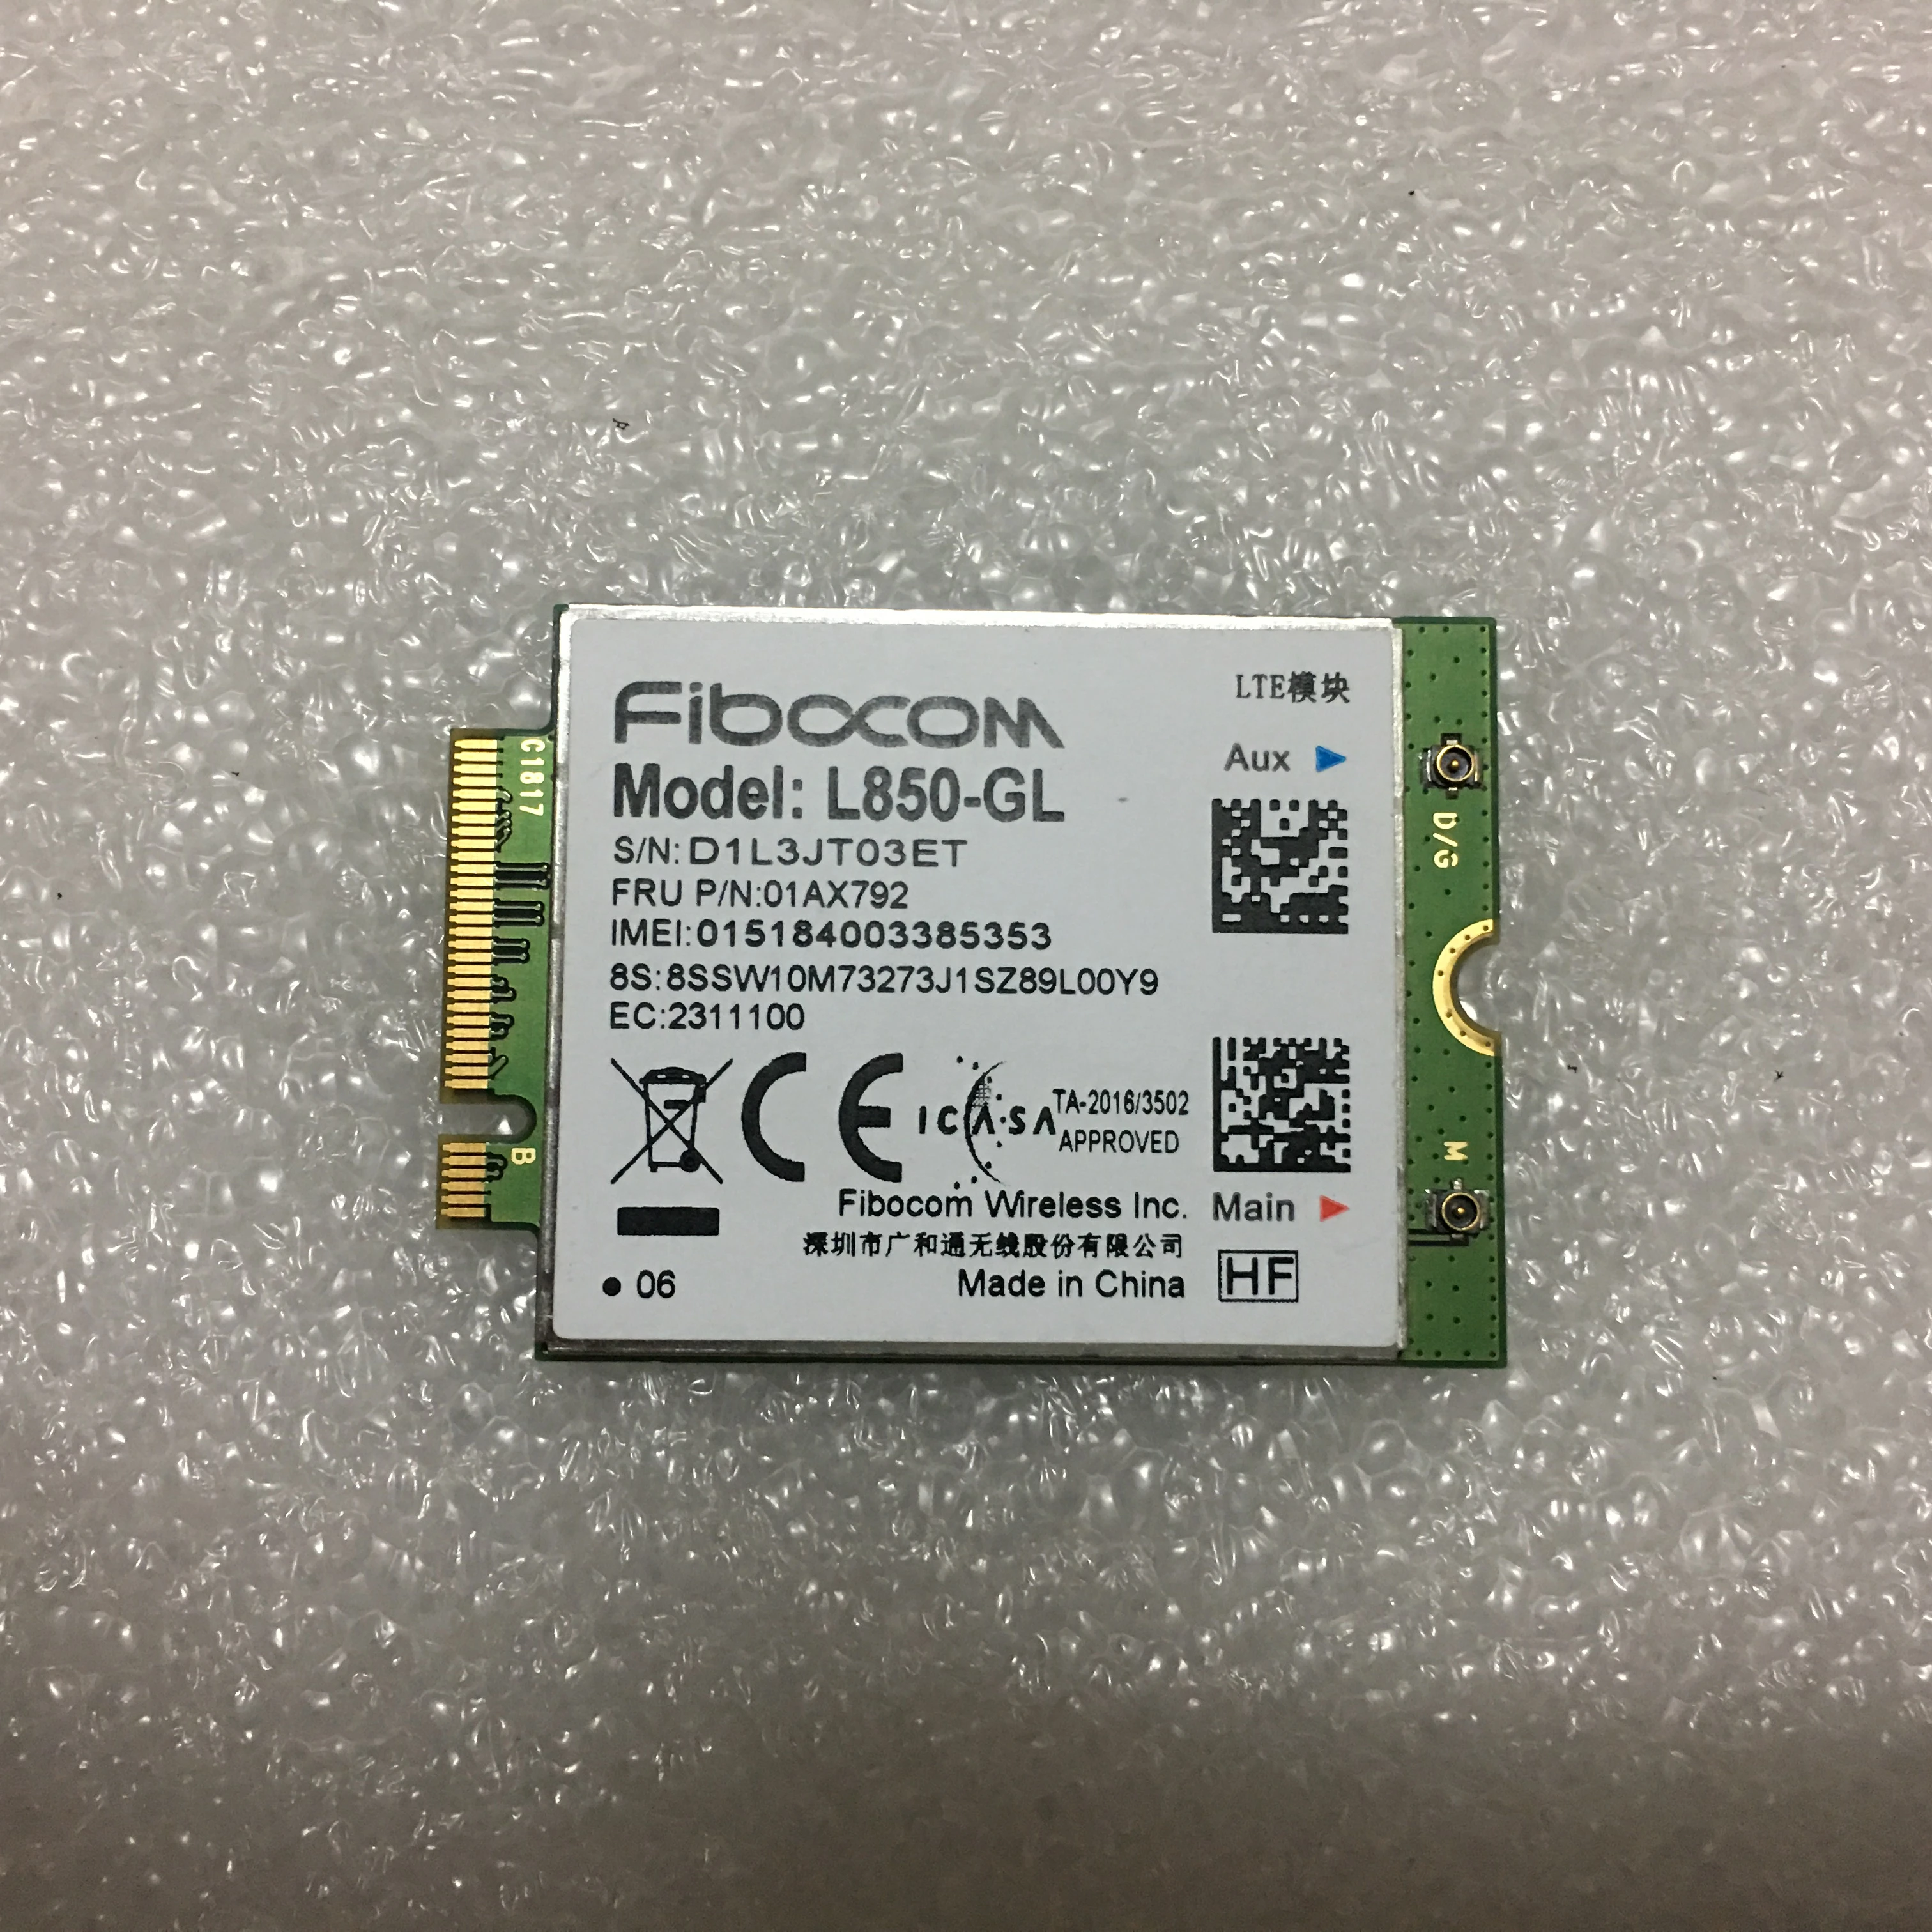 mifi router Fibocom L850-GL WWAN Card For Lenovo Thinkpad X1 carbon 6th X280 T480 T480s X1 Yoga 3rd 4th T490 T490s T580 L580 P52 01AX792 sim card modem usb